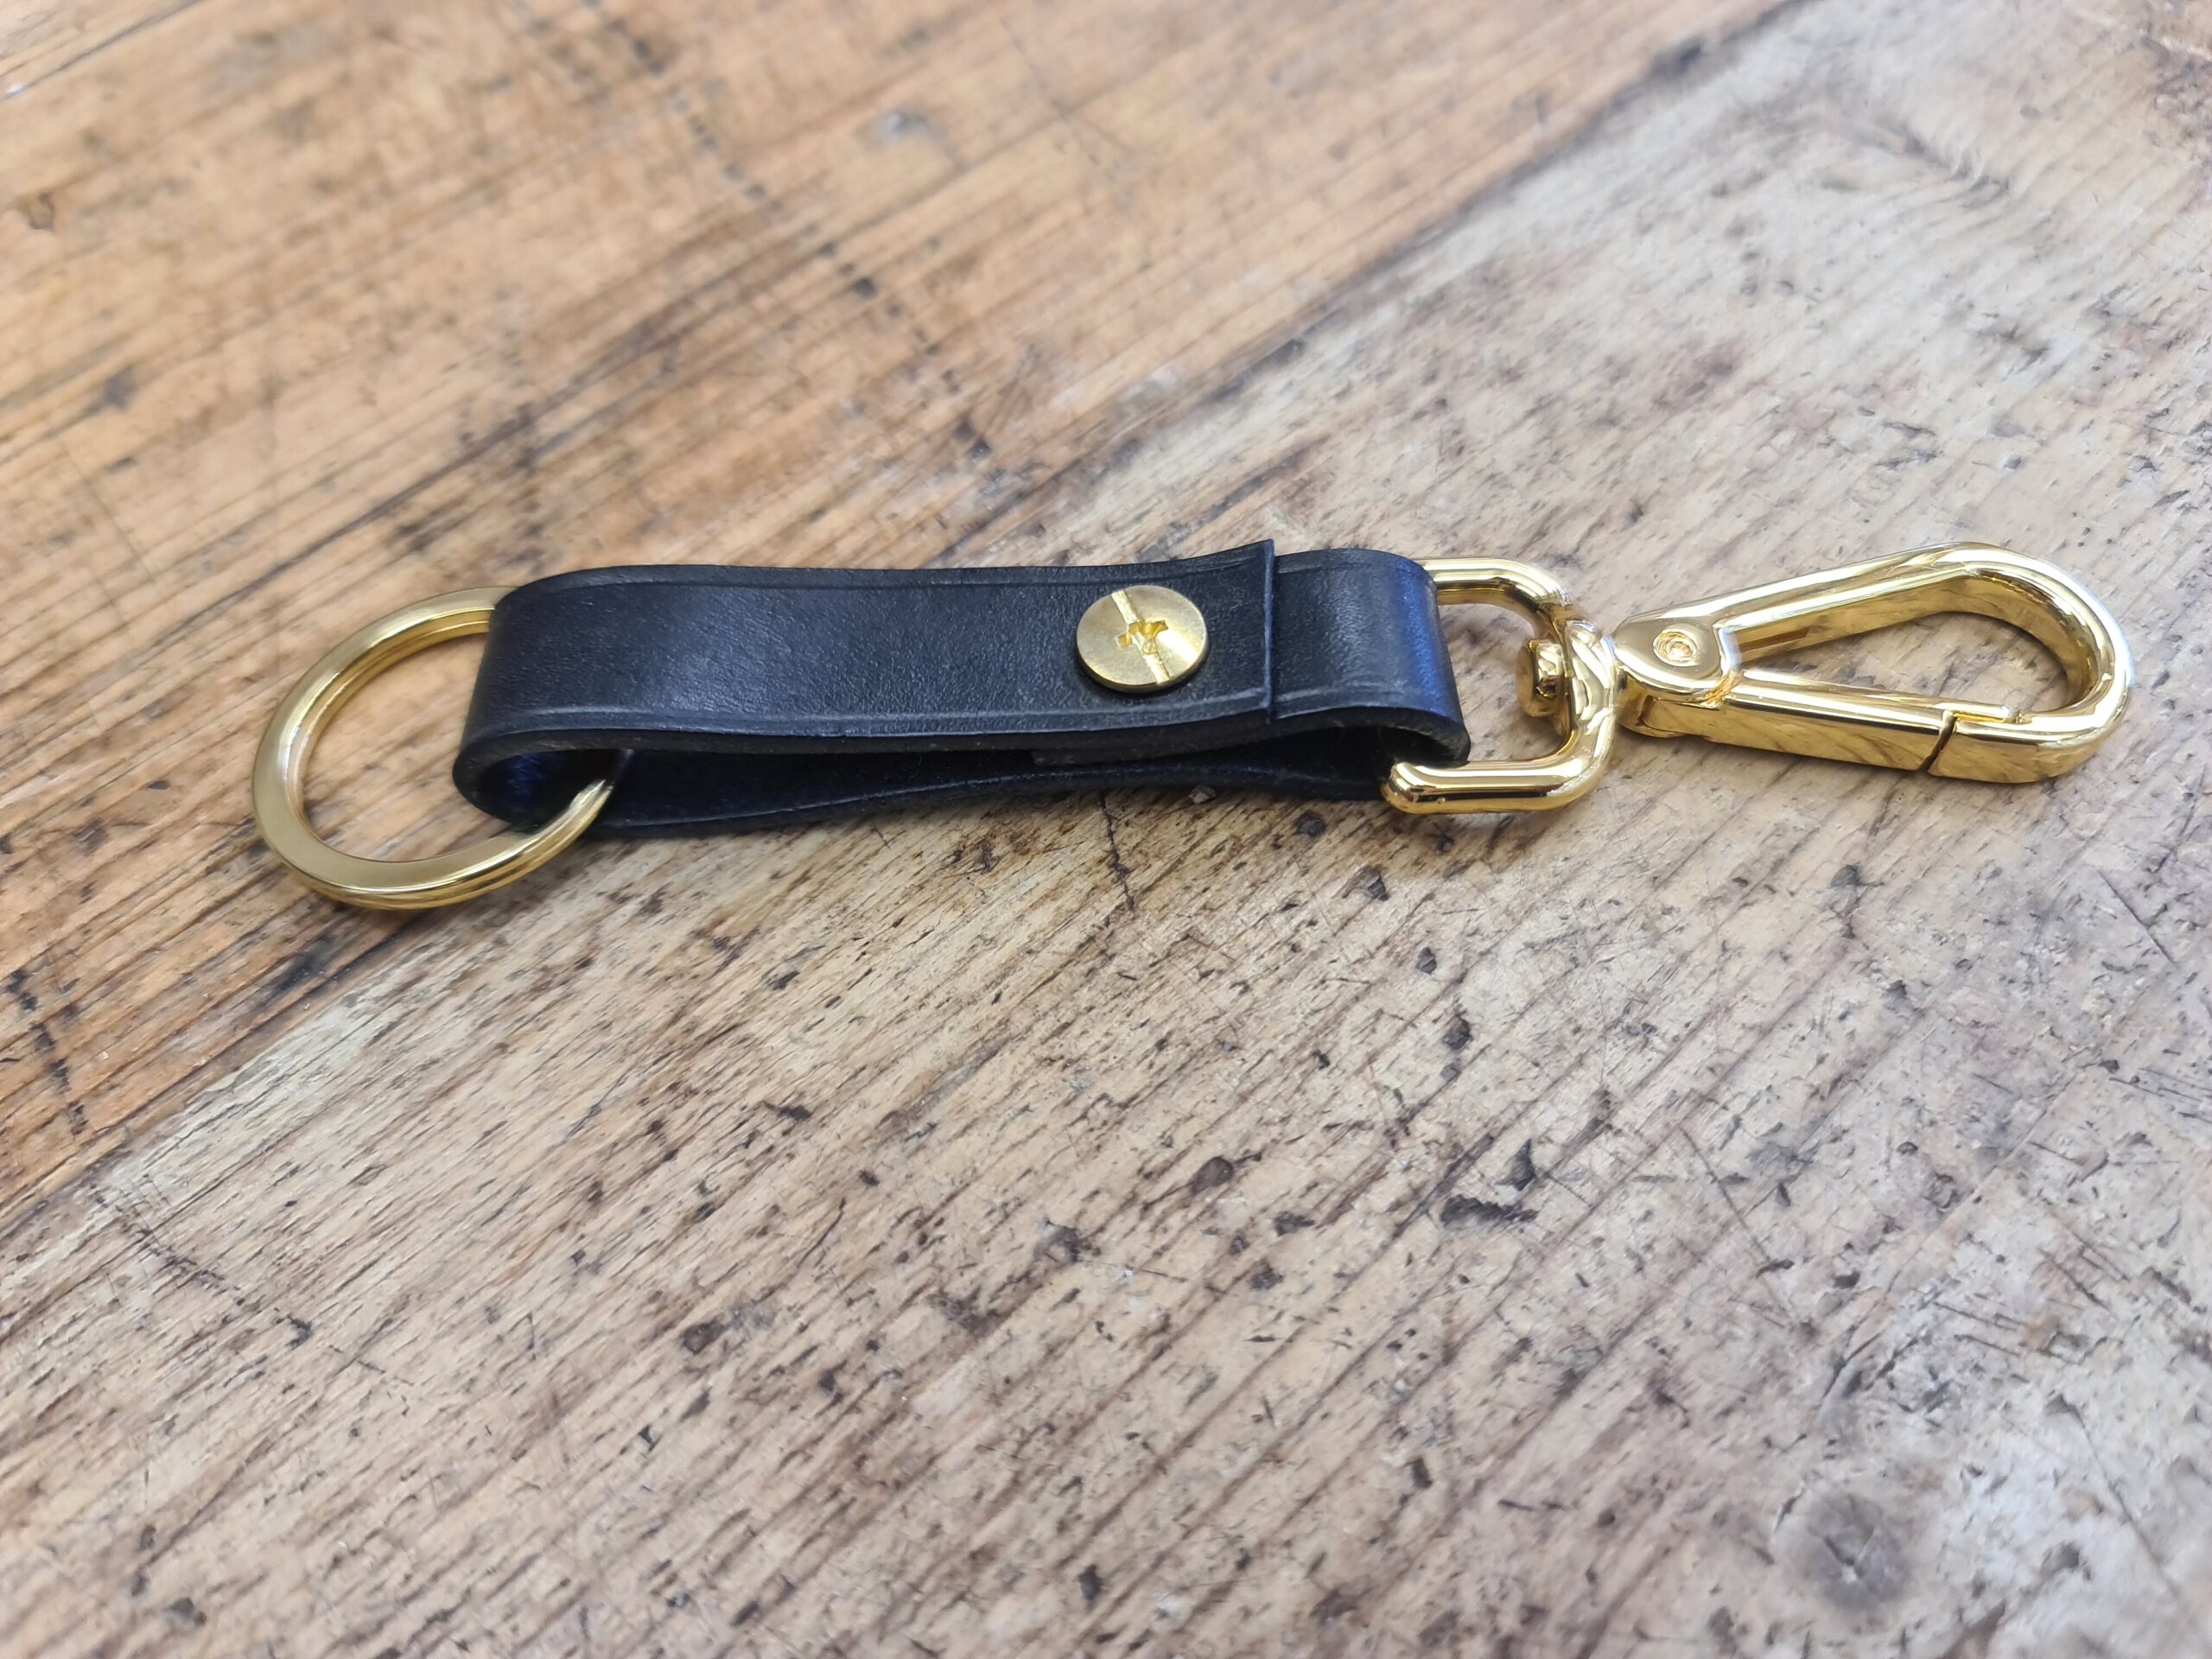 Chunky key Fob, Handy sized leather key fob